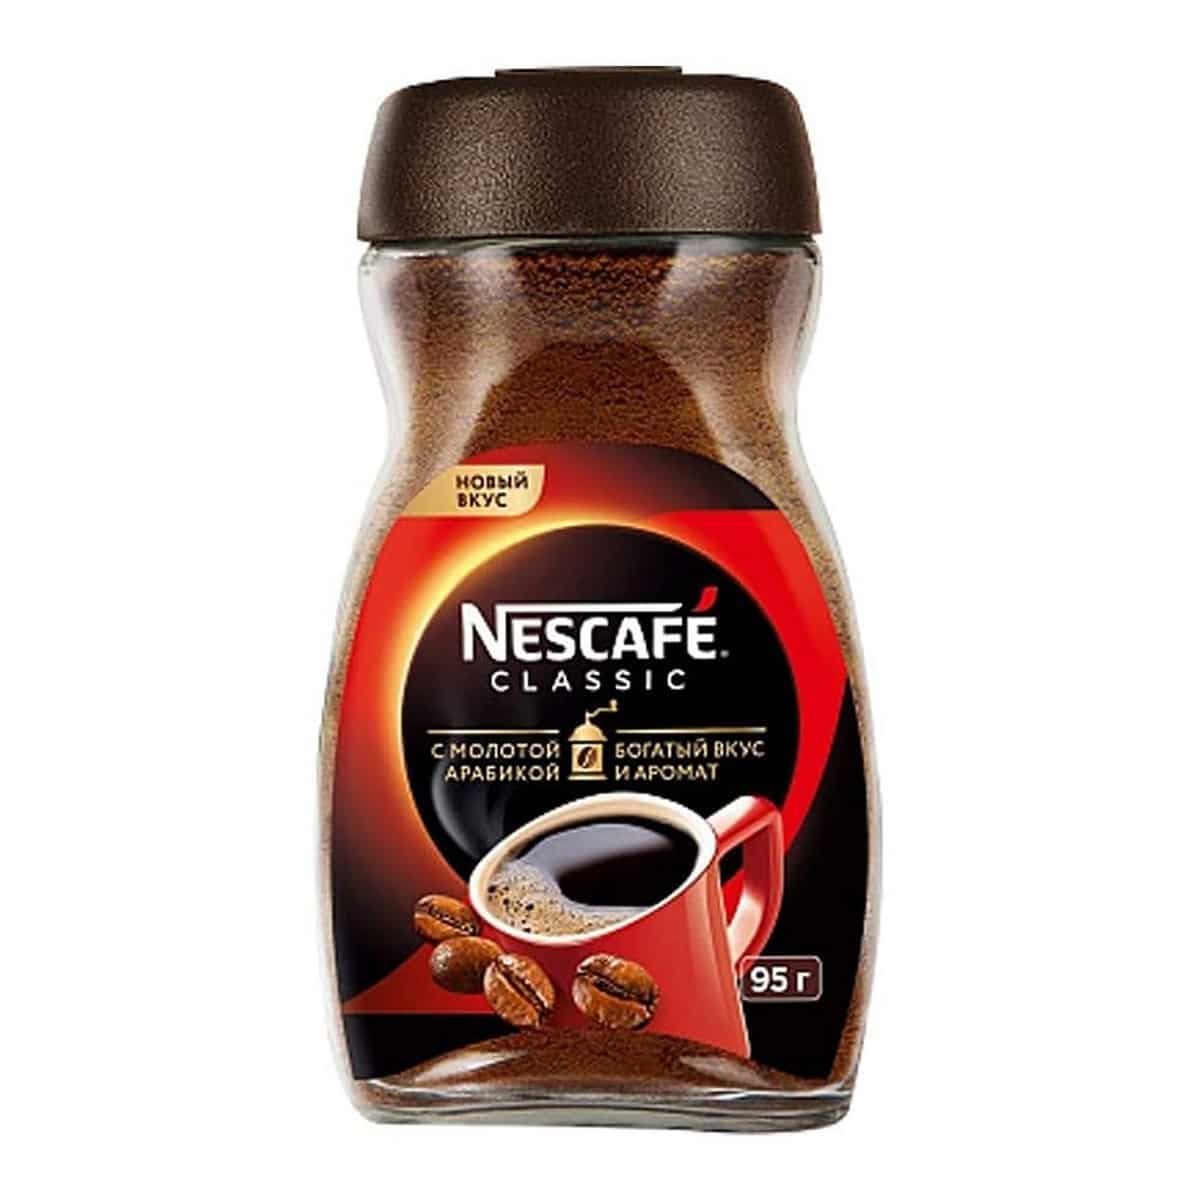 https://richesm.com/wp-content/uploads/2022/10/Nescafe-Classic-Coffee-Powder-Jar-100-grams-_2.jpg